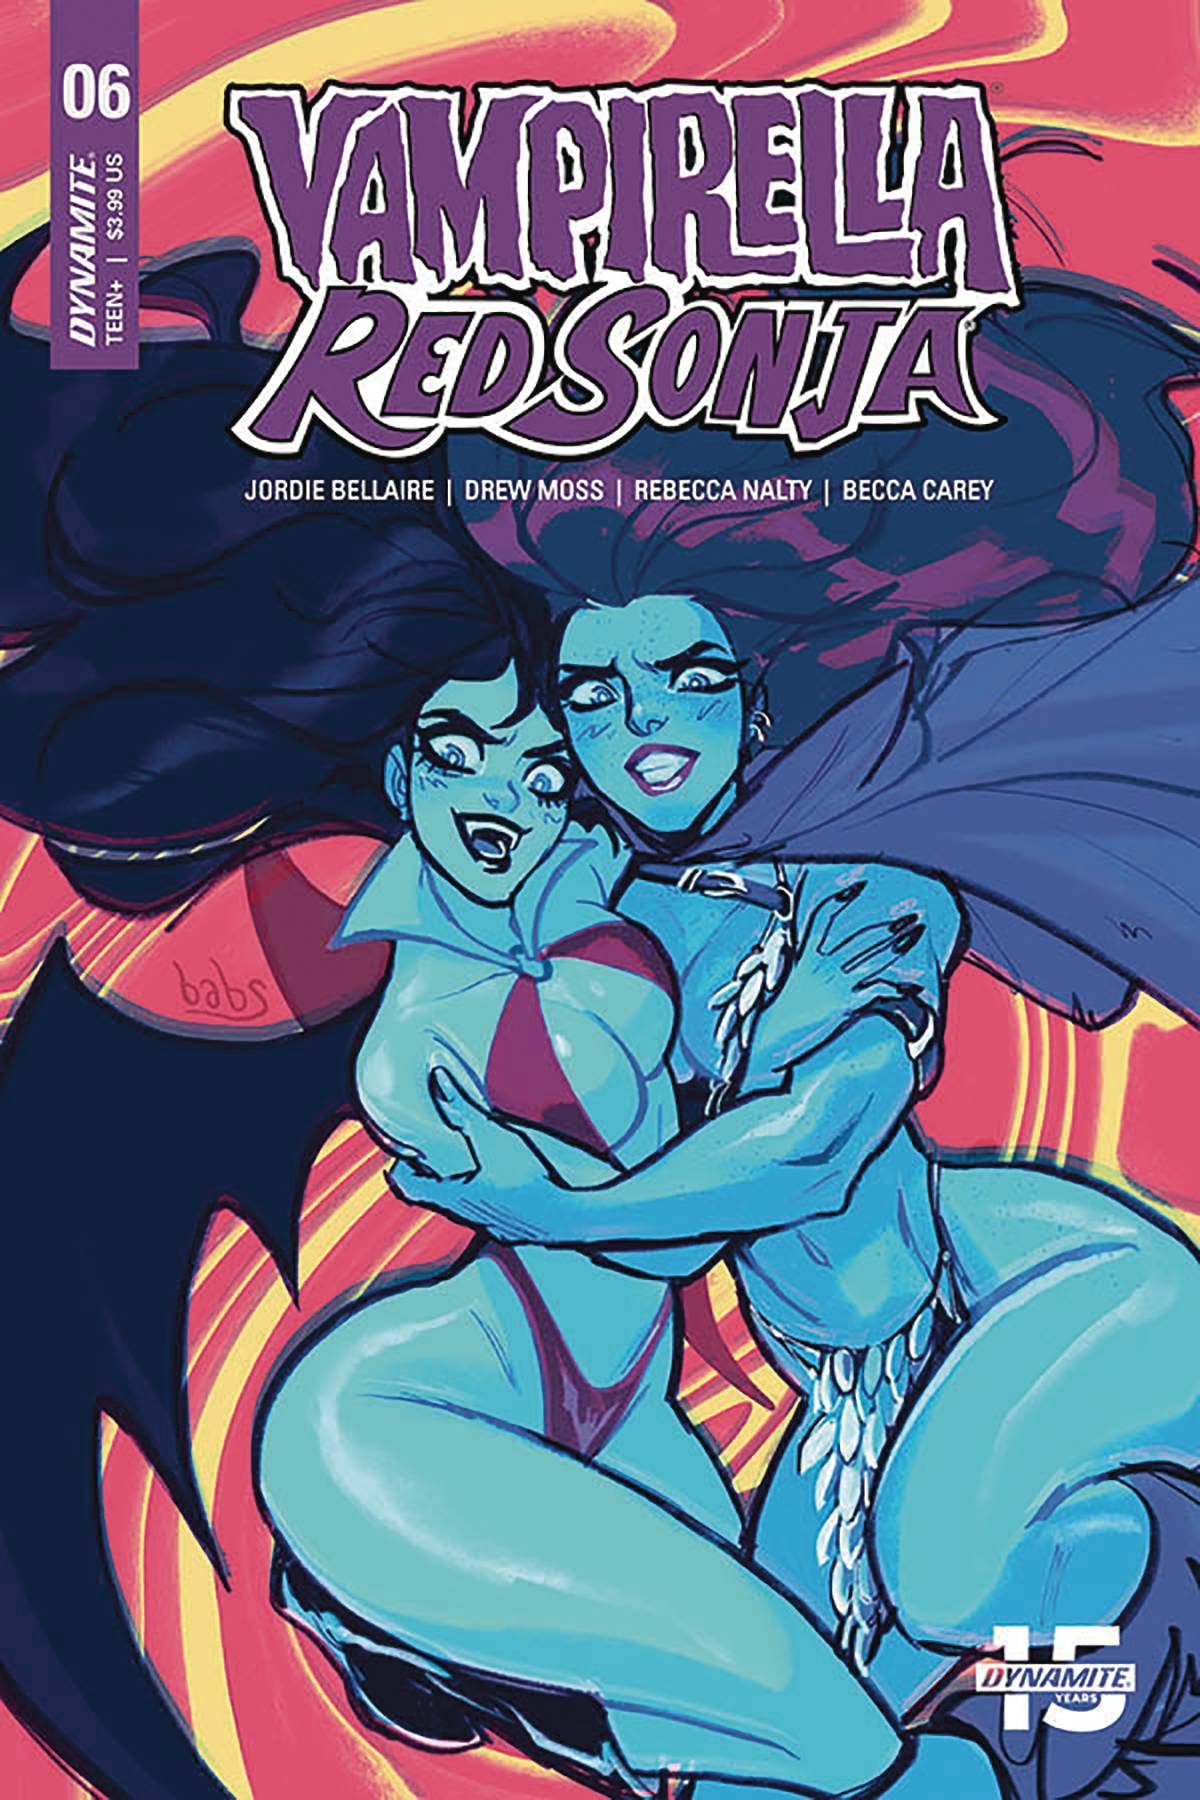 Vampirella Red Sonja #6 Cover A Babs Tarr